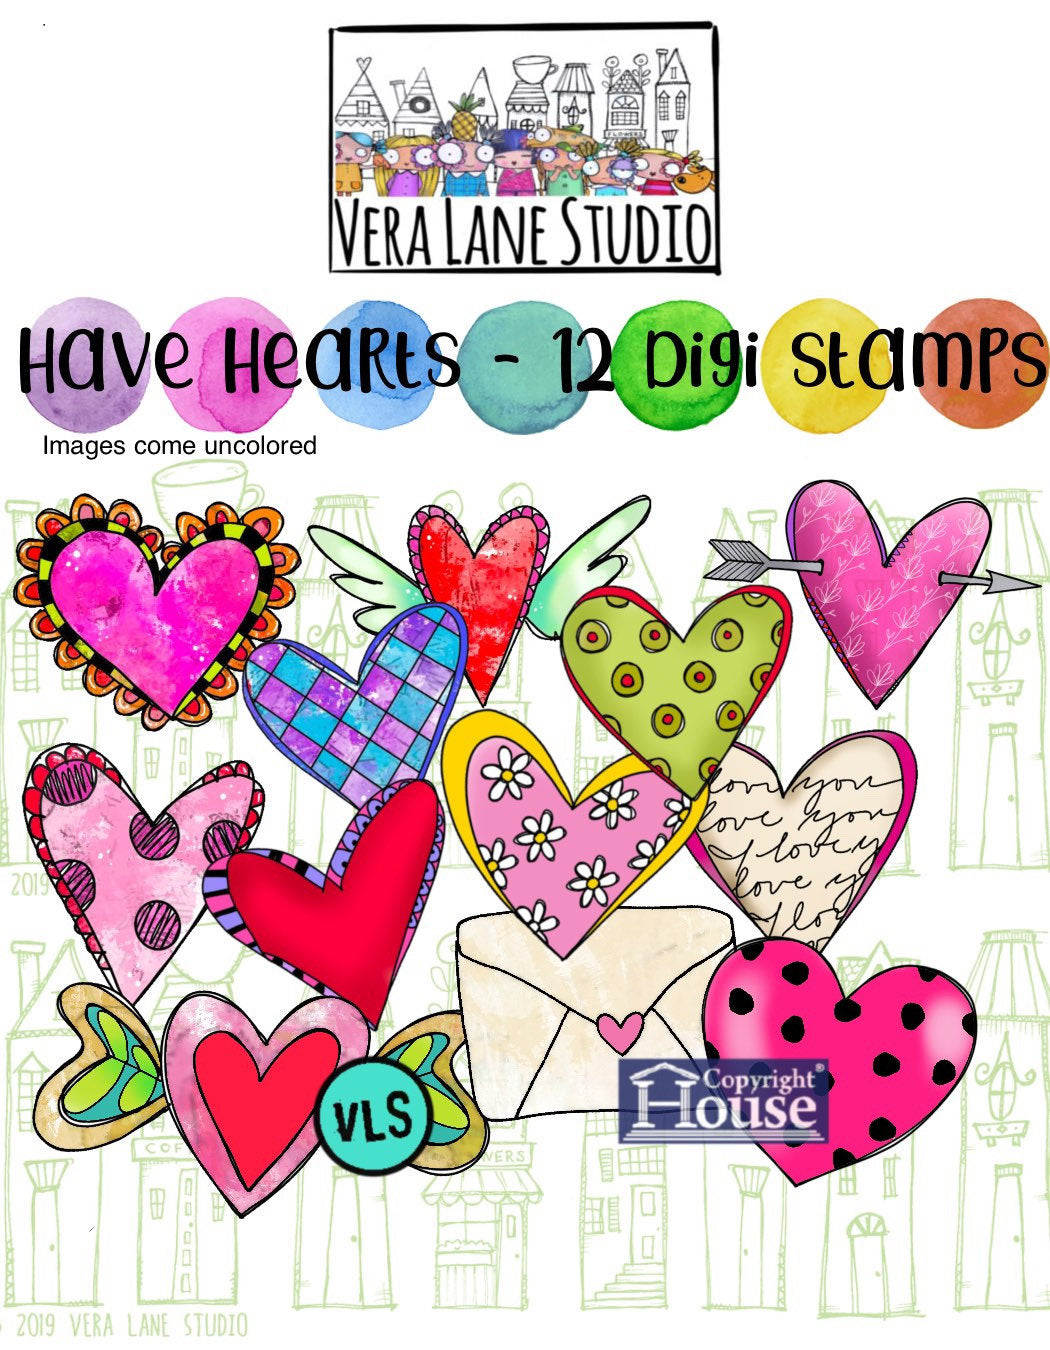 Have Hearts - Twelve digi stamps available for instant download